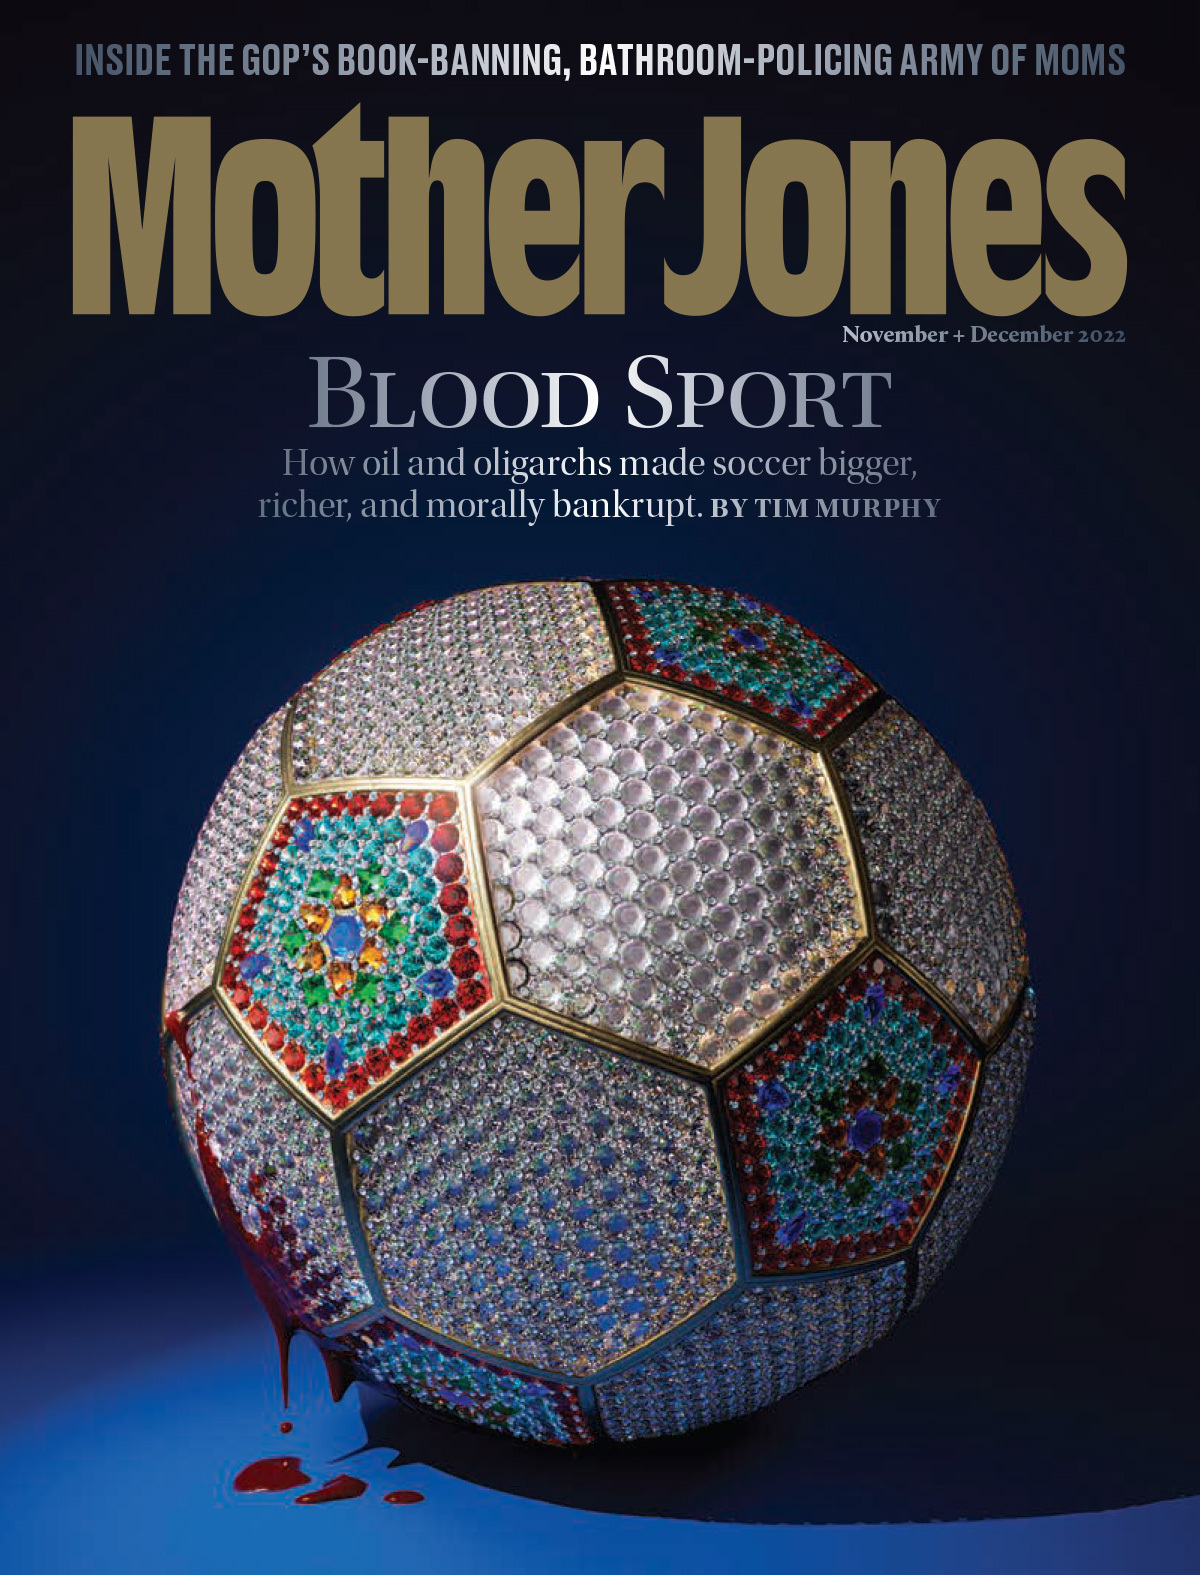 Mother Jones - “Blood Sport” November + December 2022